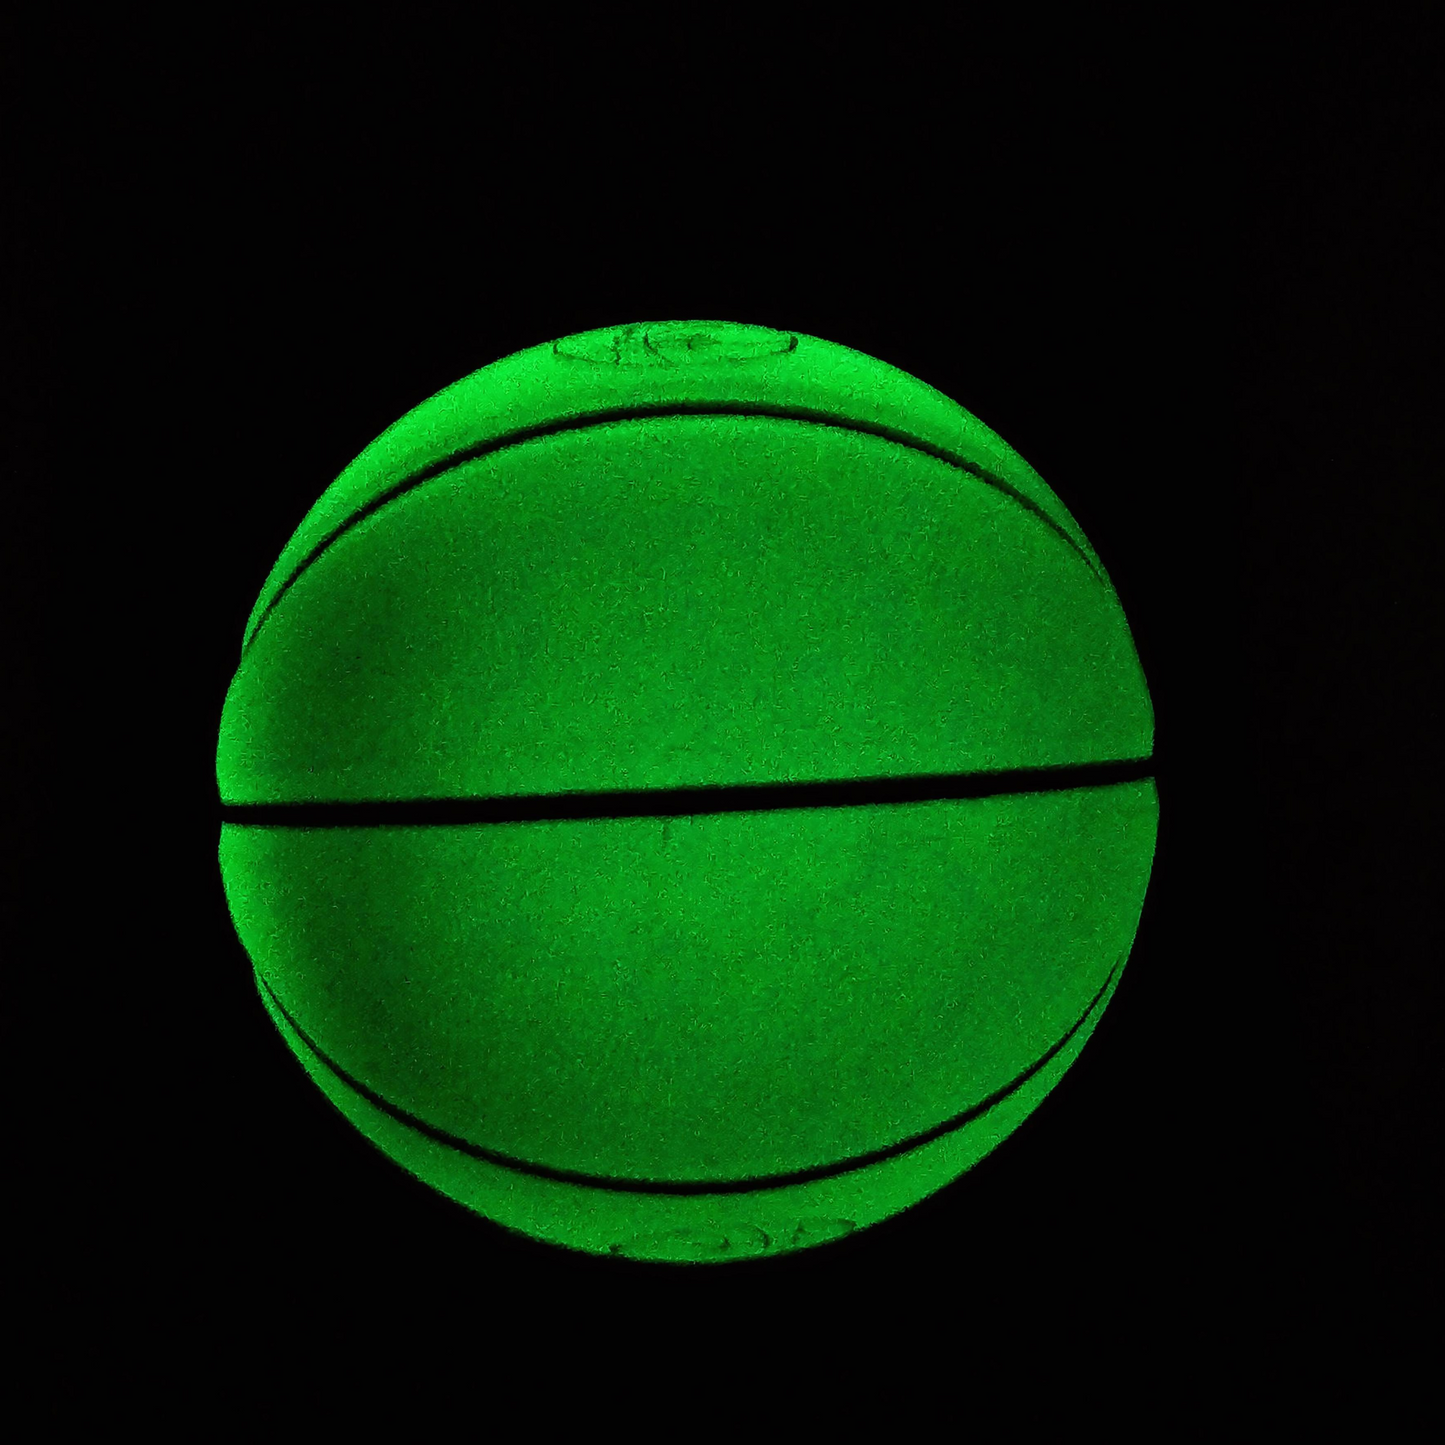 Ballon de basket Green Light